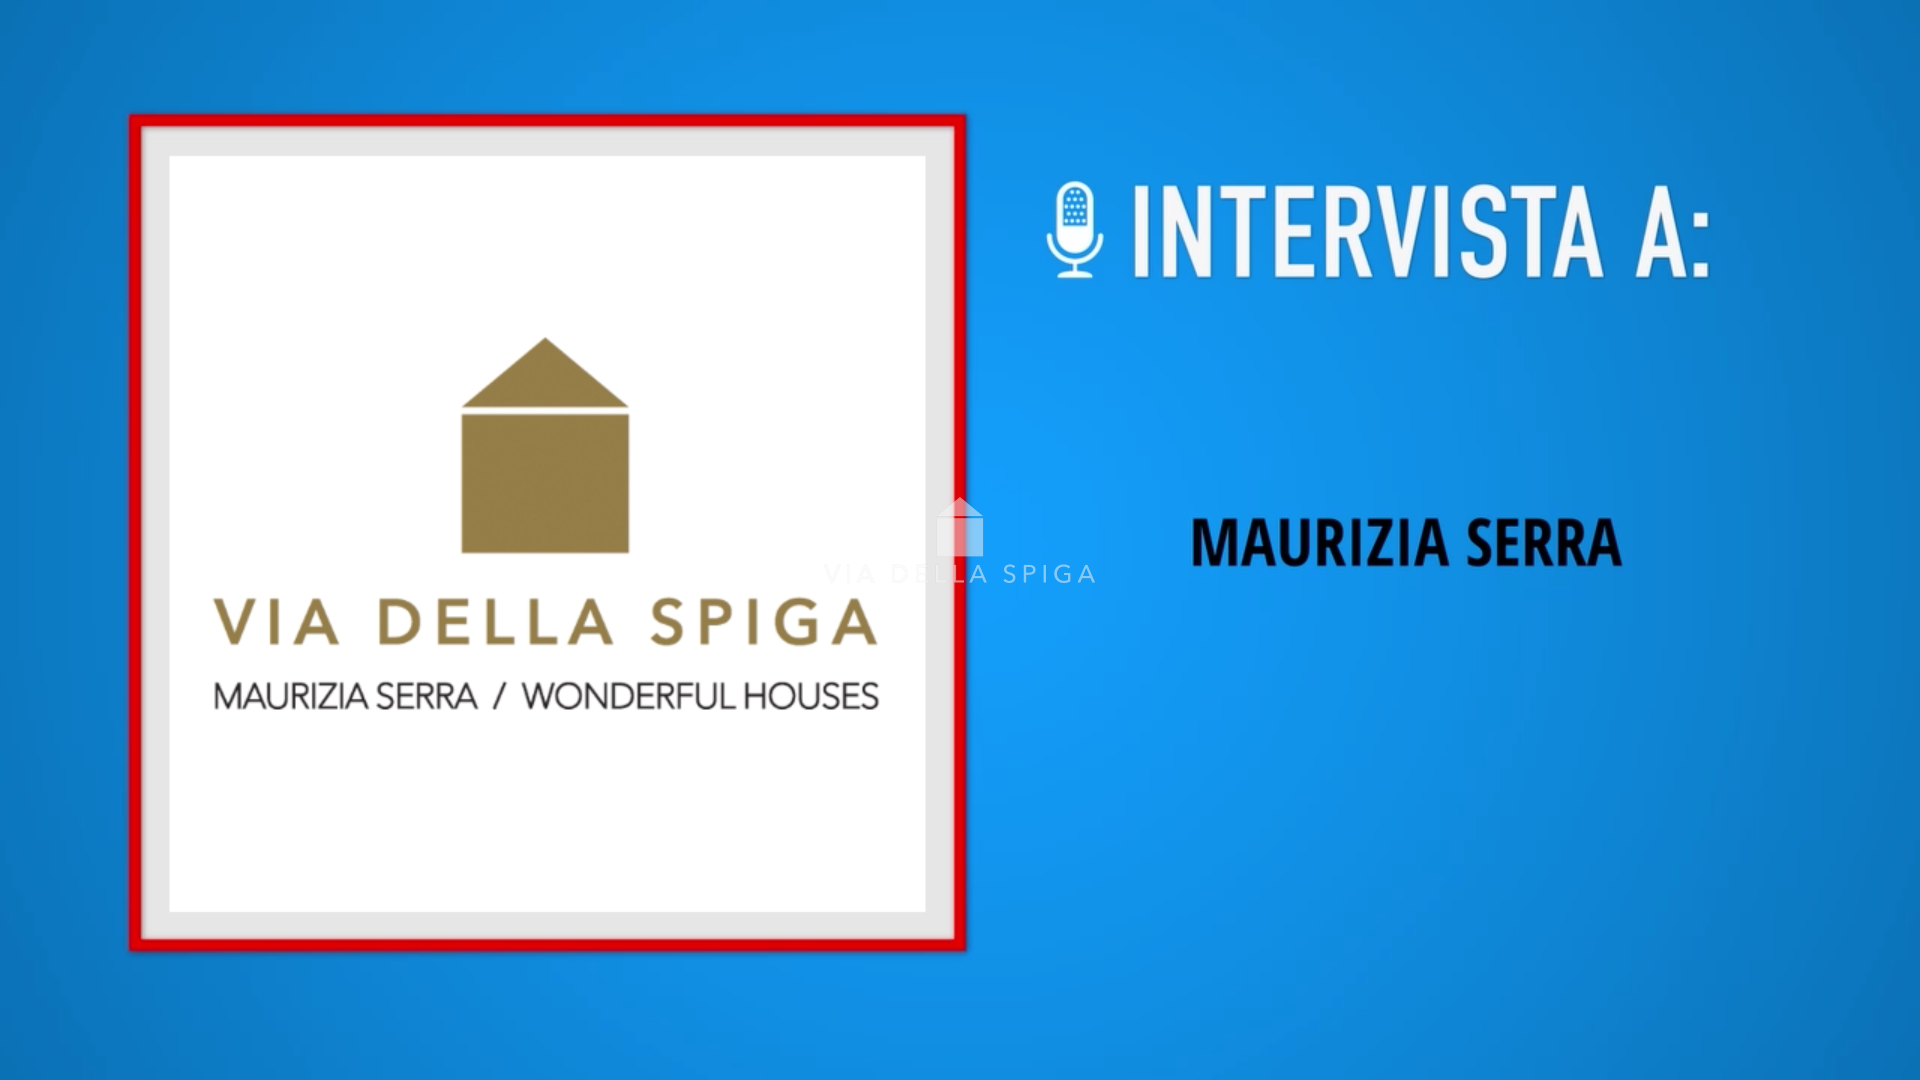 Intervista a Maurizia Serra, founder di Via della Spiga Wonderful Houses